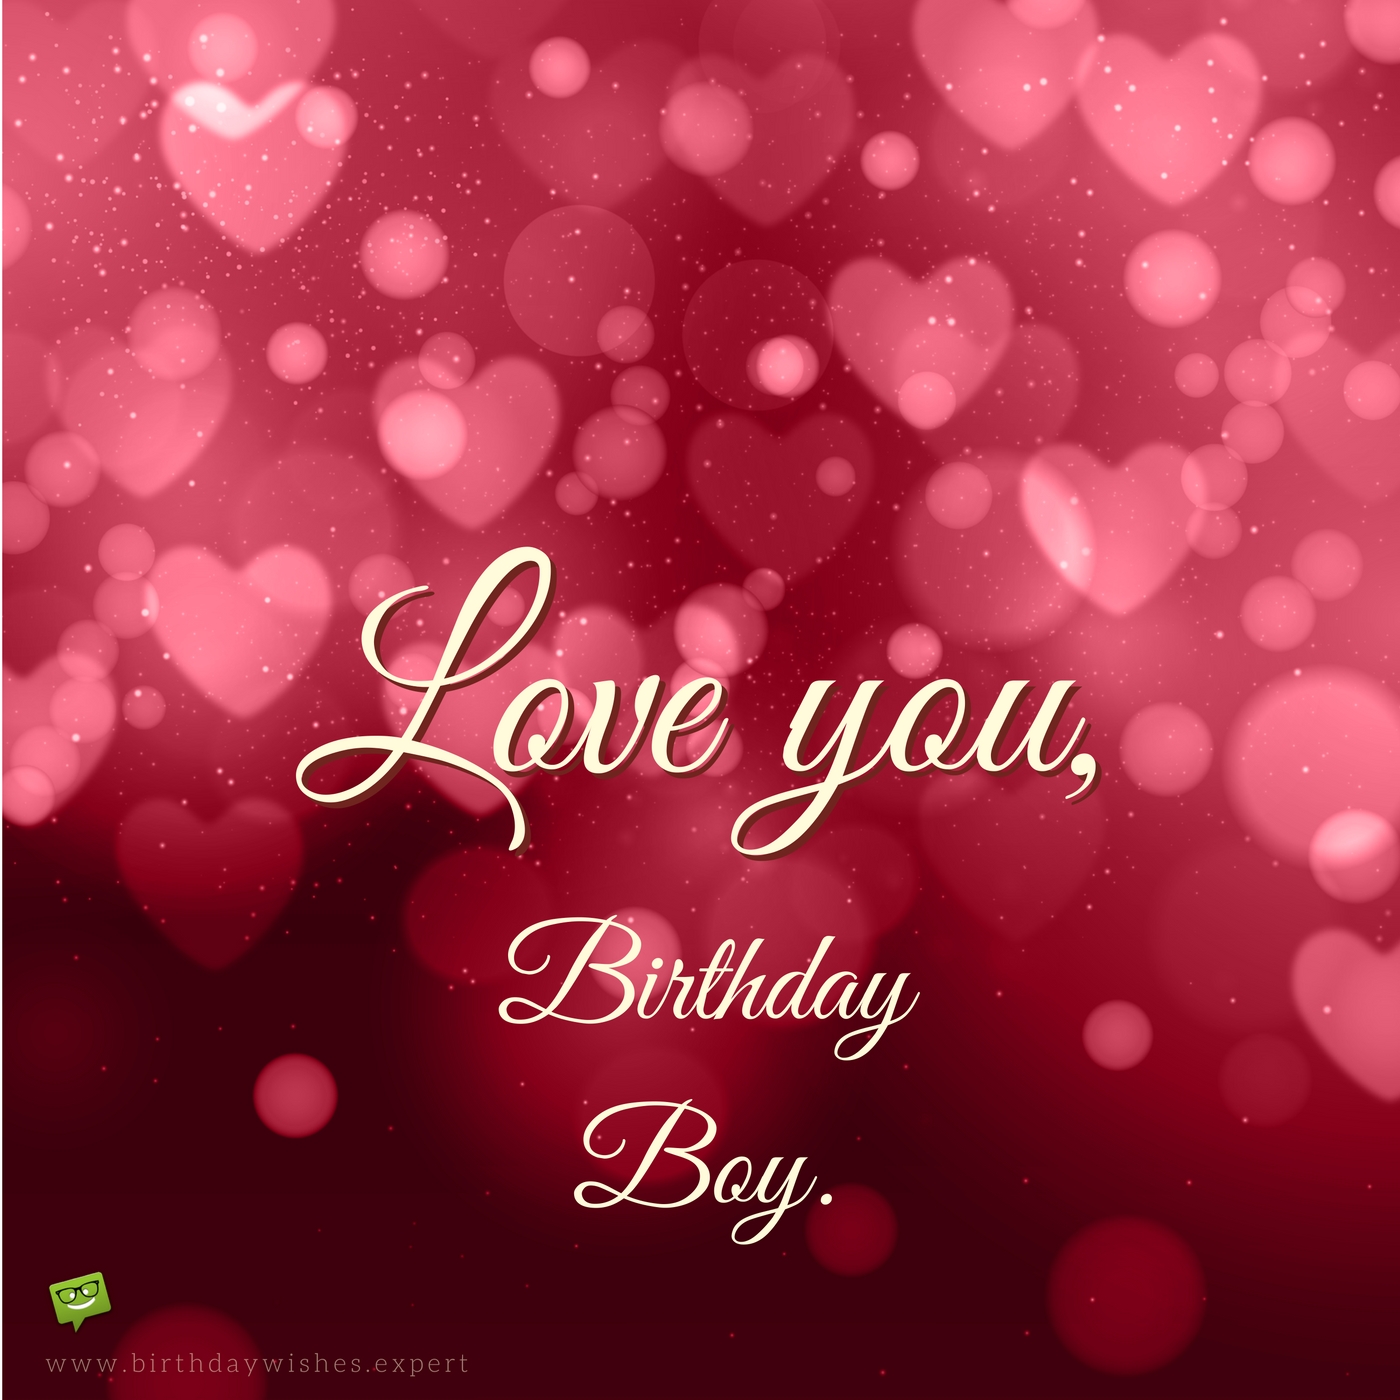 Happy Birthday Wishes Quotes Wallpaper for Boyfriend Girlfriend